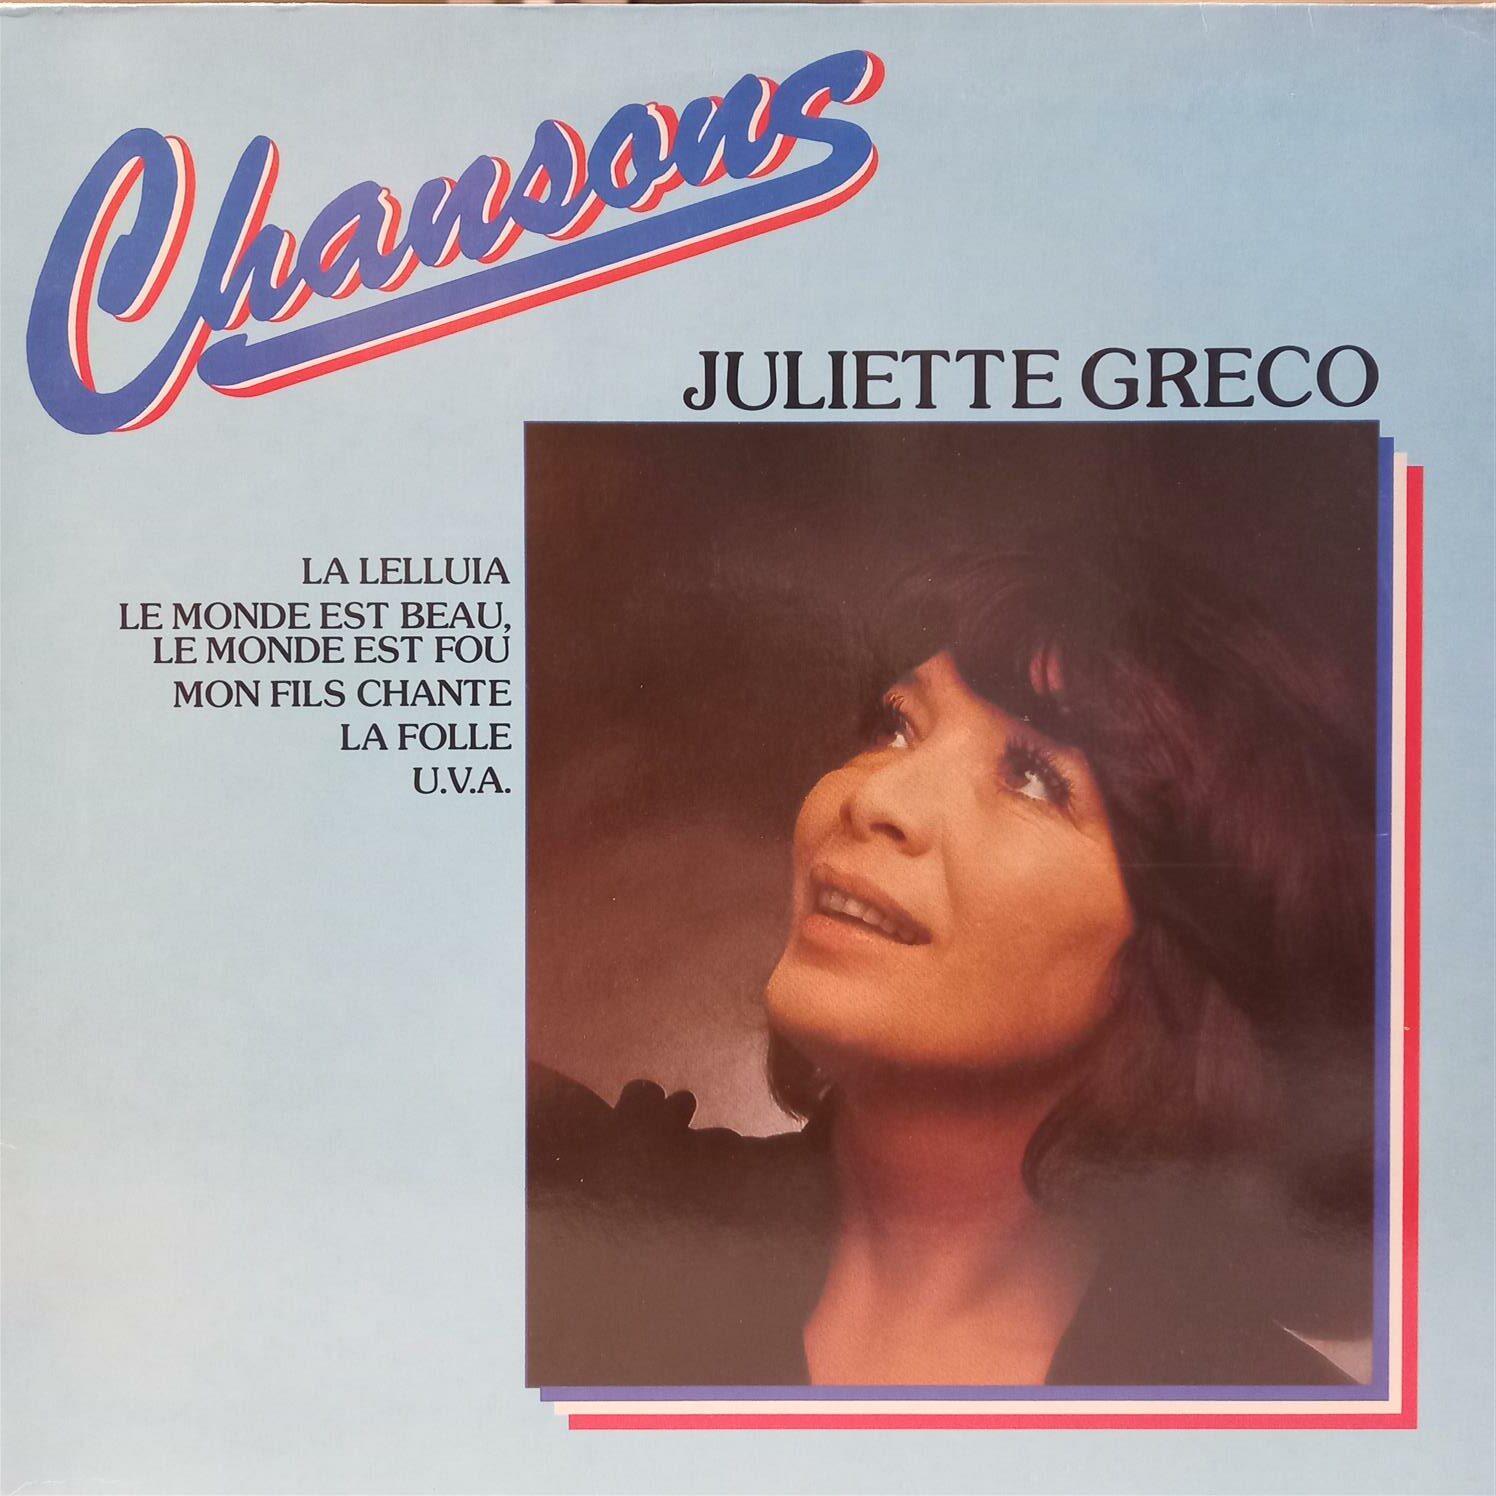 JULIETTE GRECO – CHANSONS ON